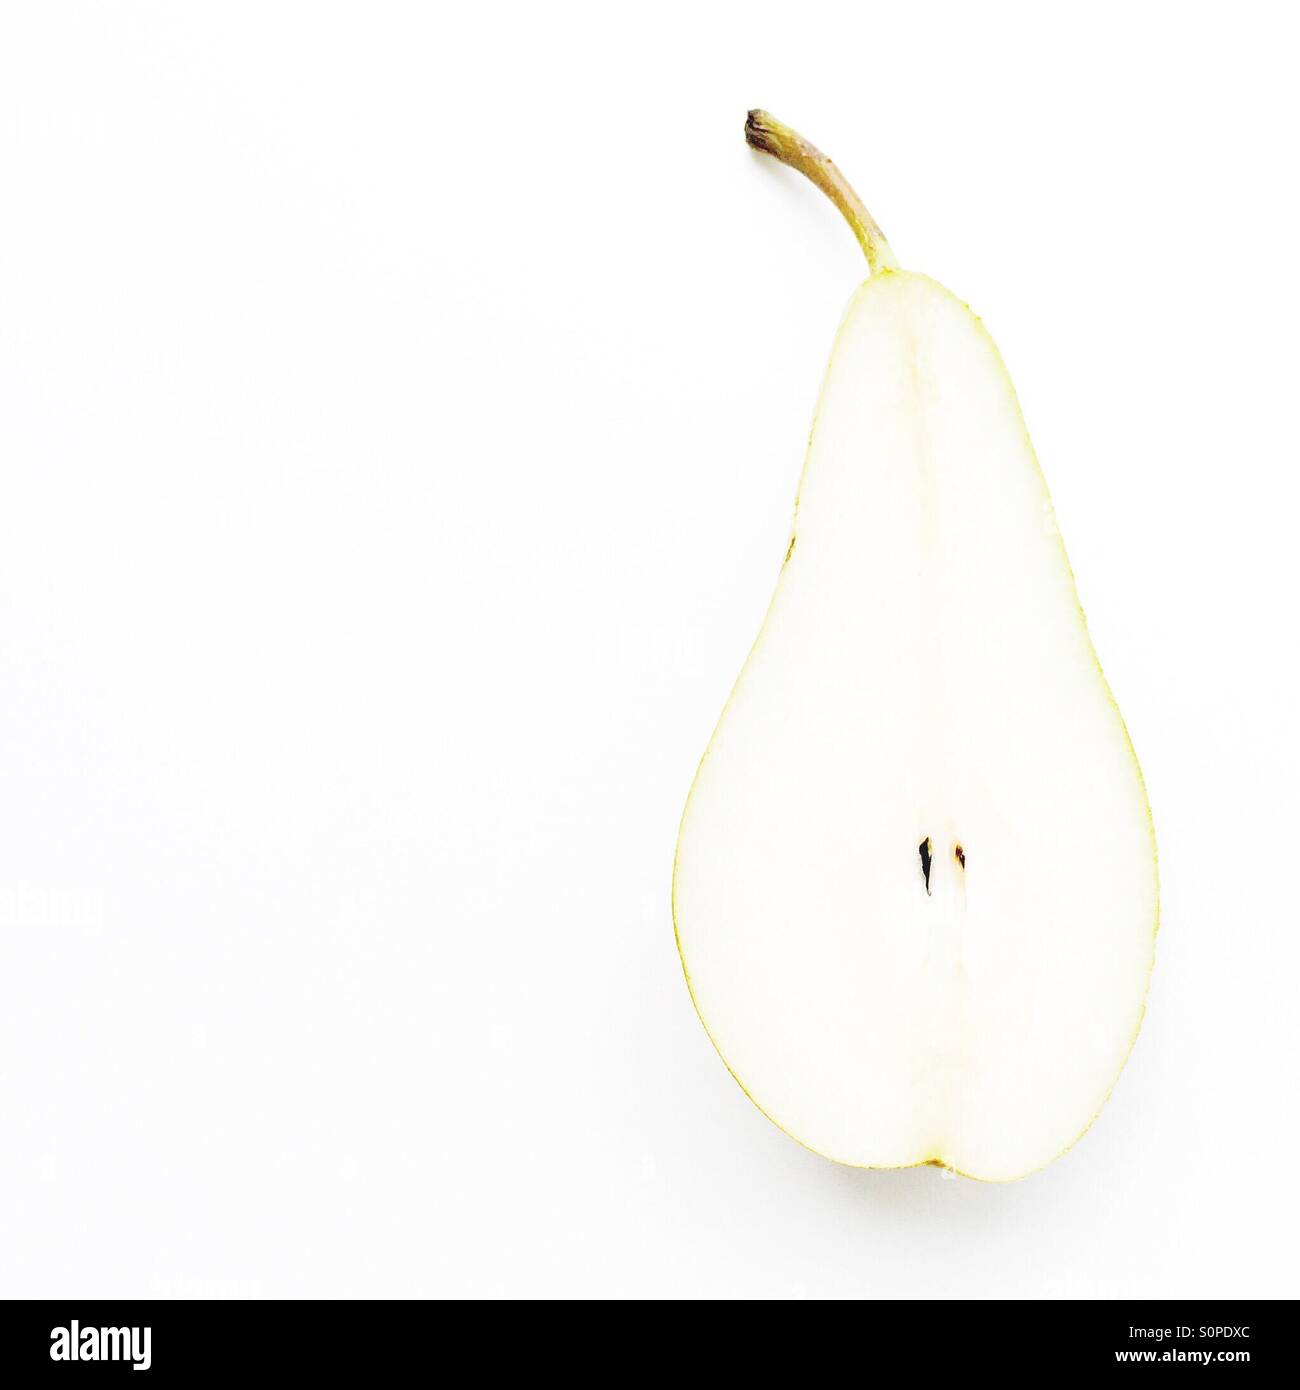 Minimalist image of a Pear cut in half Stock Photo